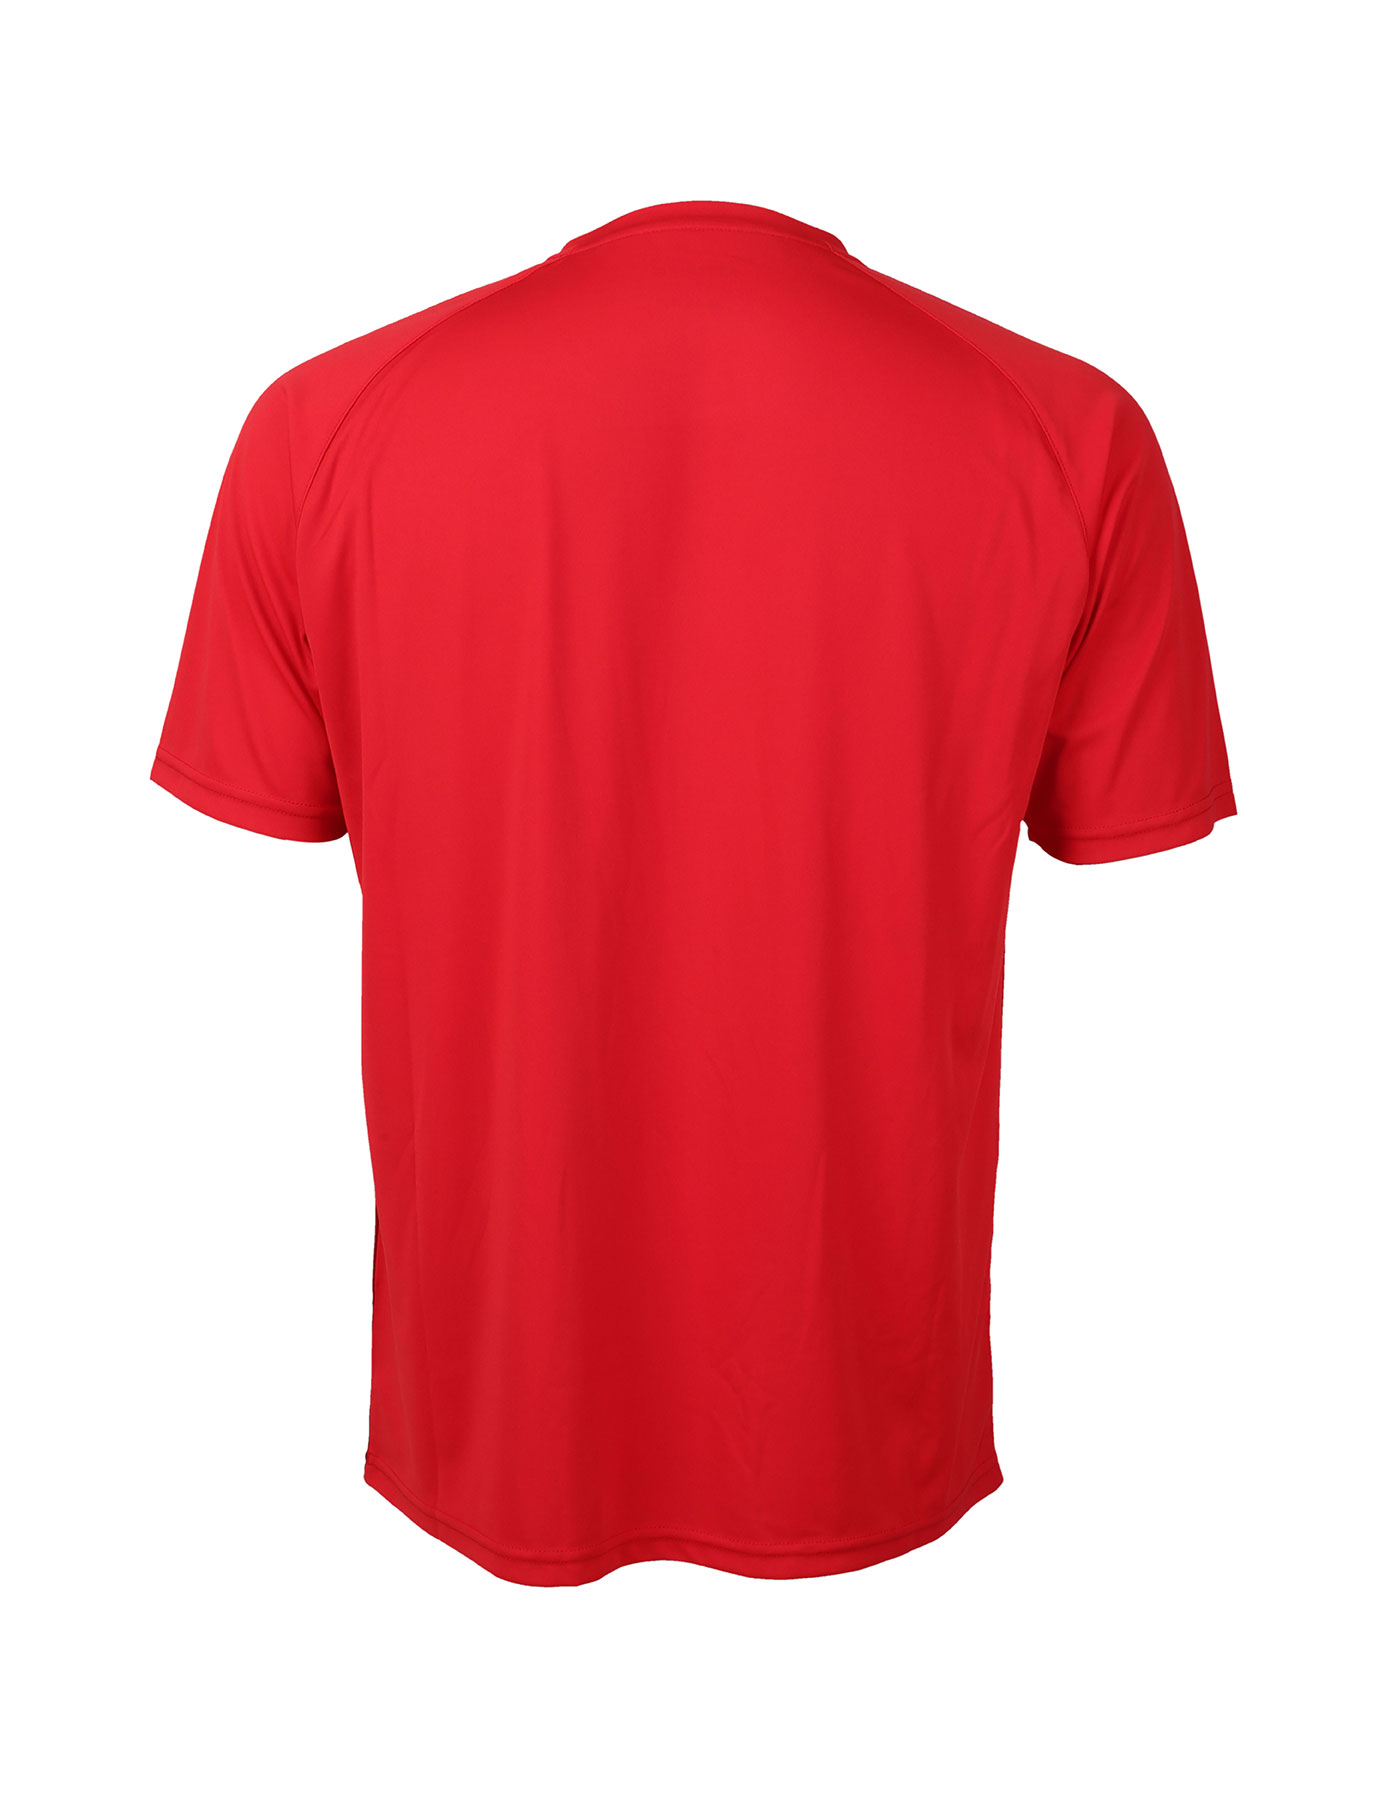 FZ FORZA Men Balkan T-Shirt - Rot - XXL